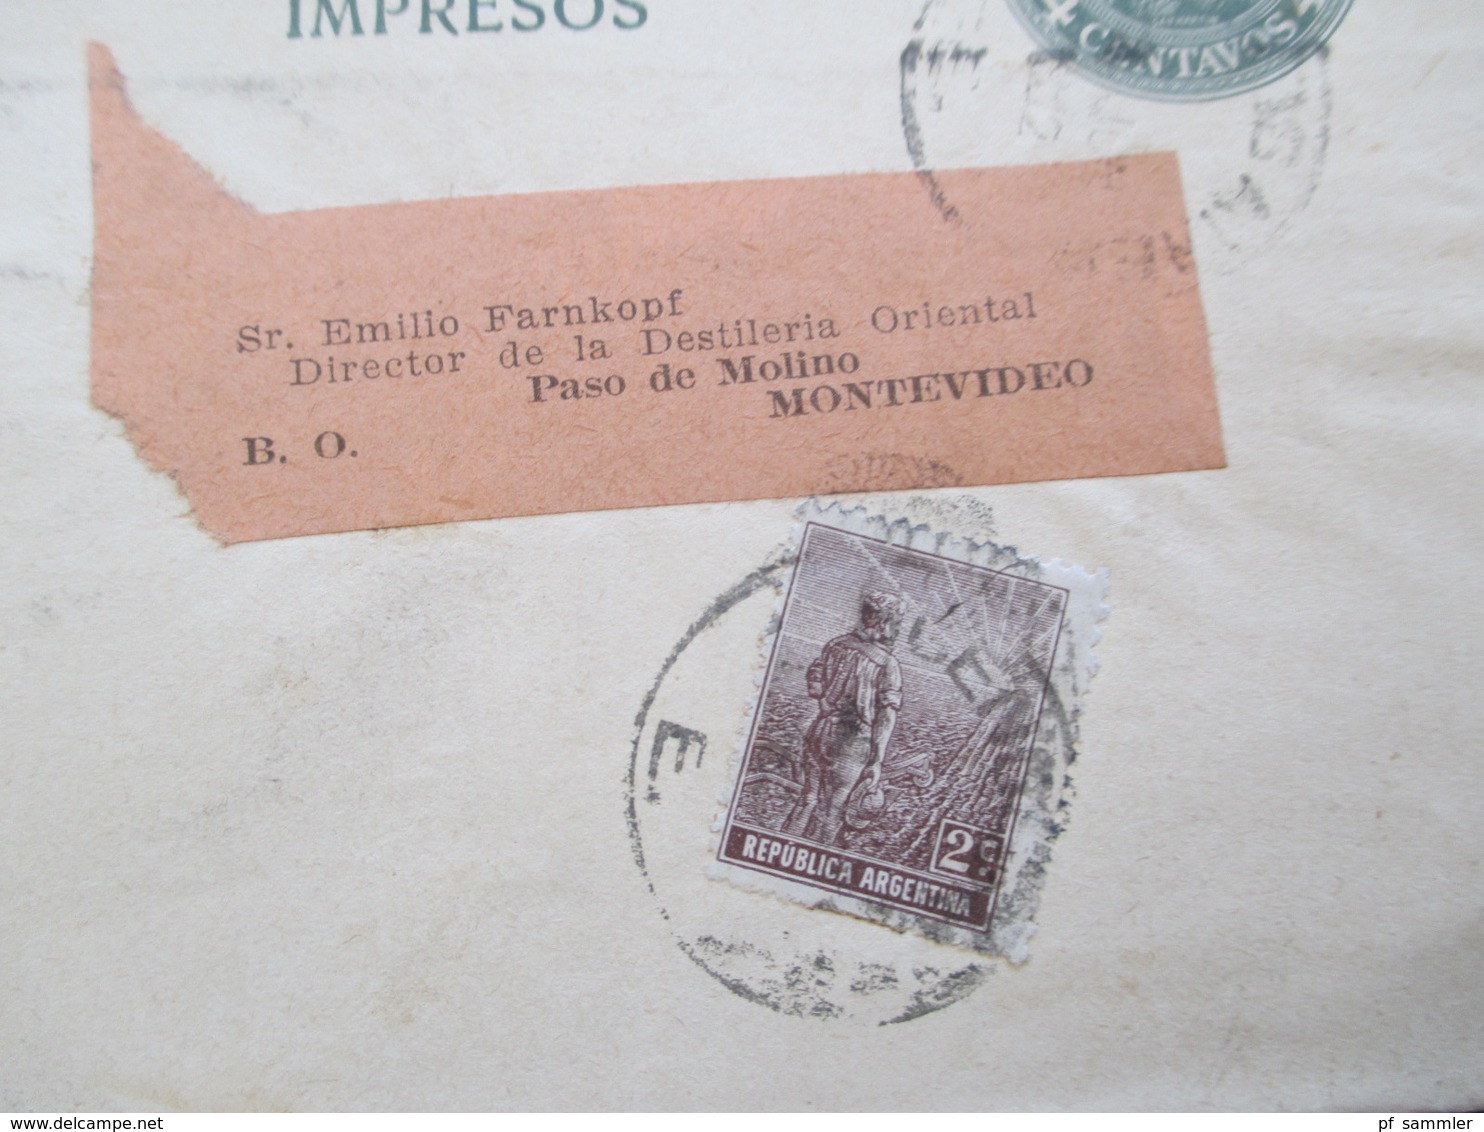 Argentinien 1912 Streifband Mit Zusatzfrankatur An Emilio Farnkopf Director De La Destileria Oriental Paso De Molino - Storia Postale